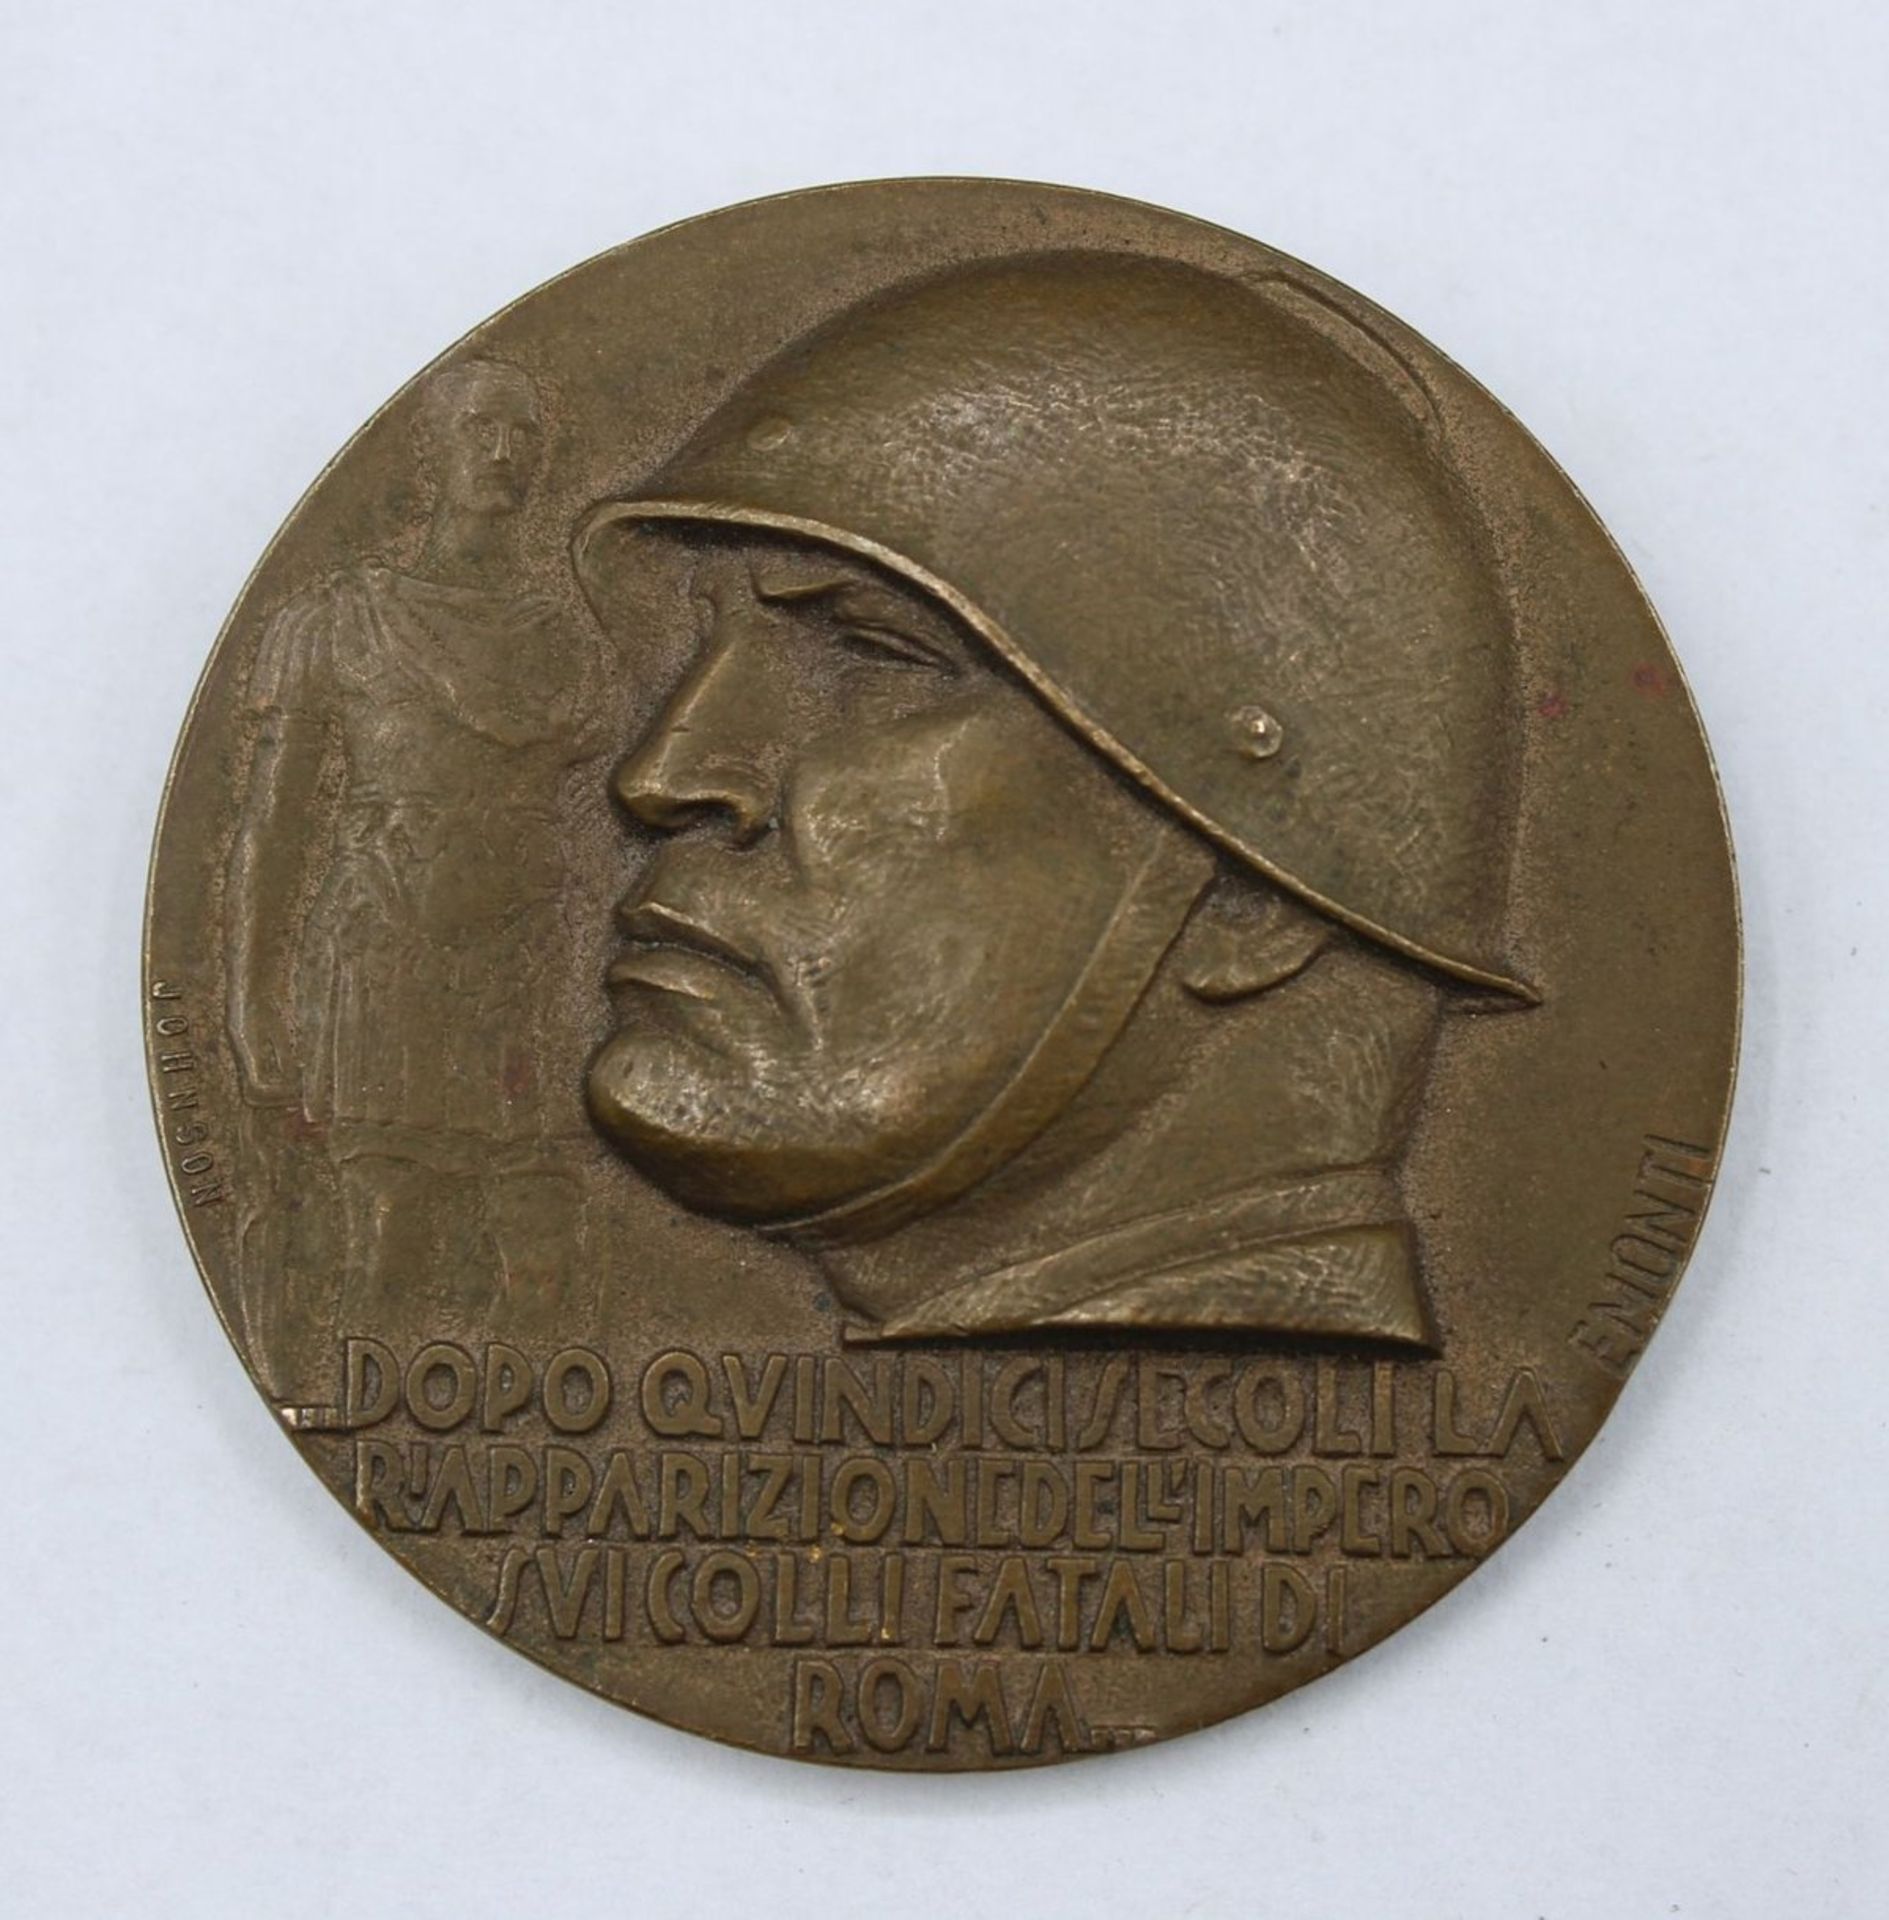 Medaille o.ä., Italien, signiert "E.Monzi", Profil Musollini, Bronze, D-4,5cm.